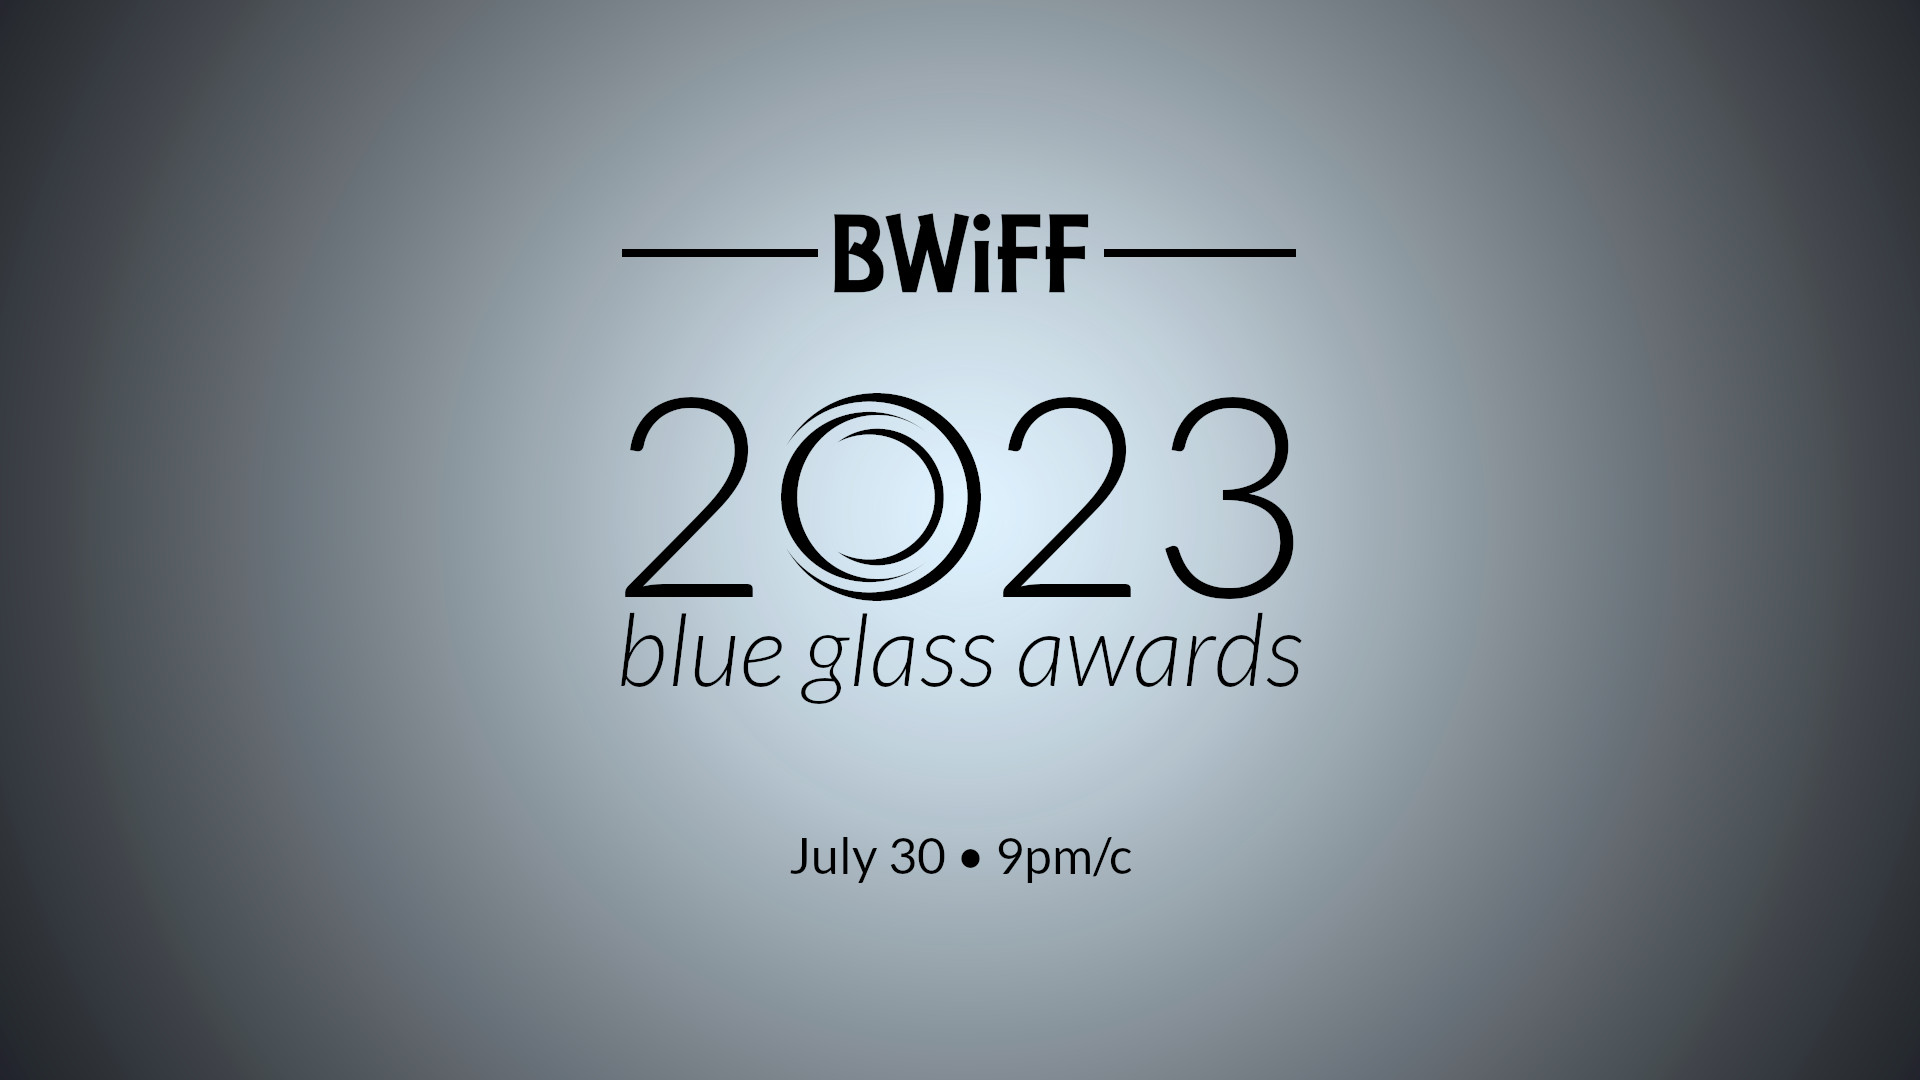 BWiFF 2023 Blue Glass Awards • July 30 • 9pm/c